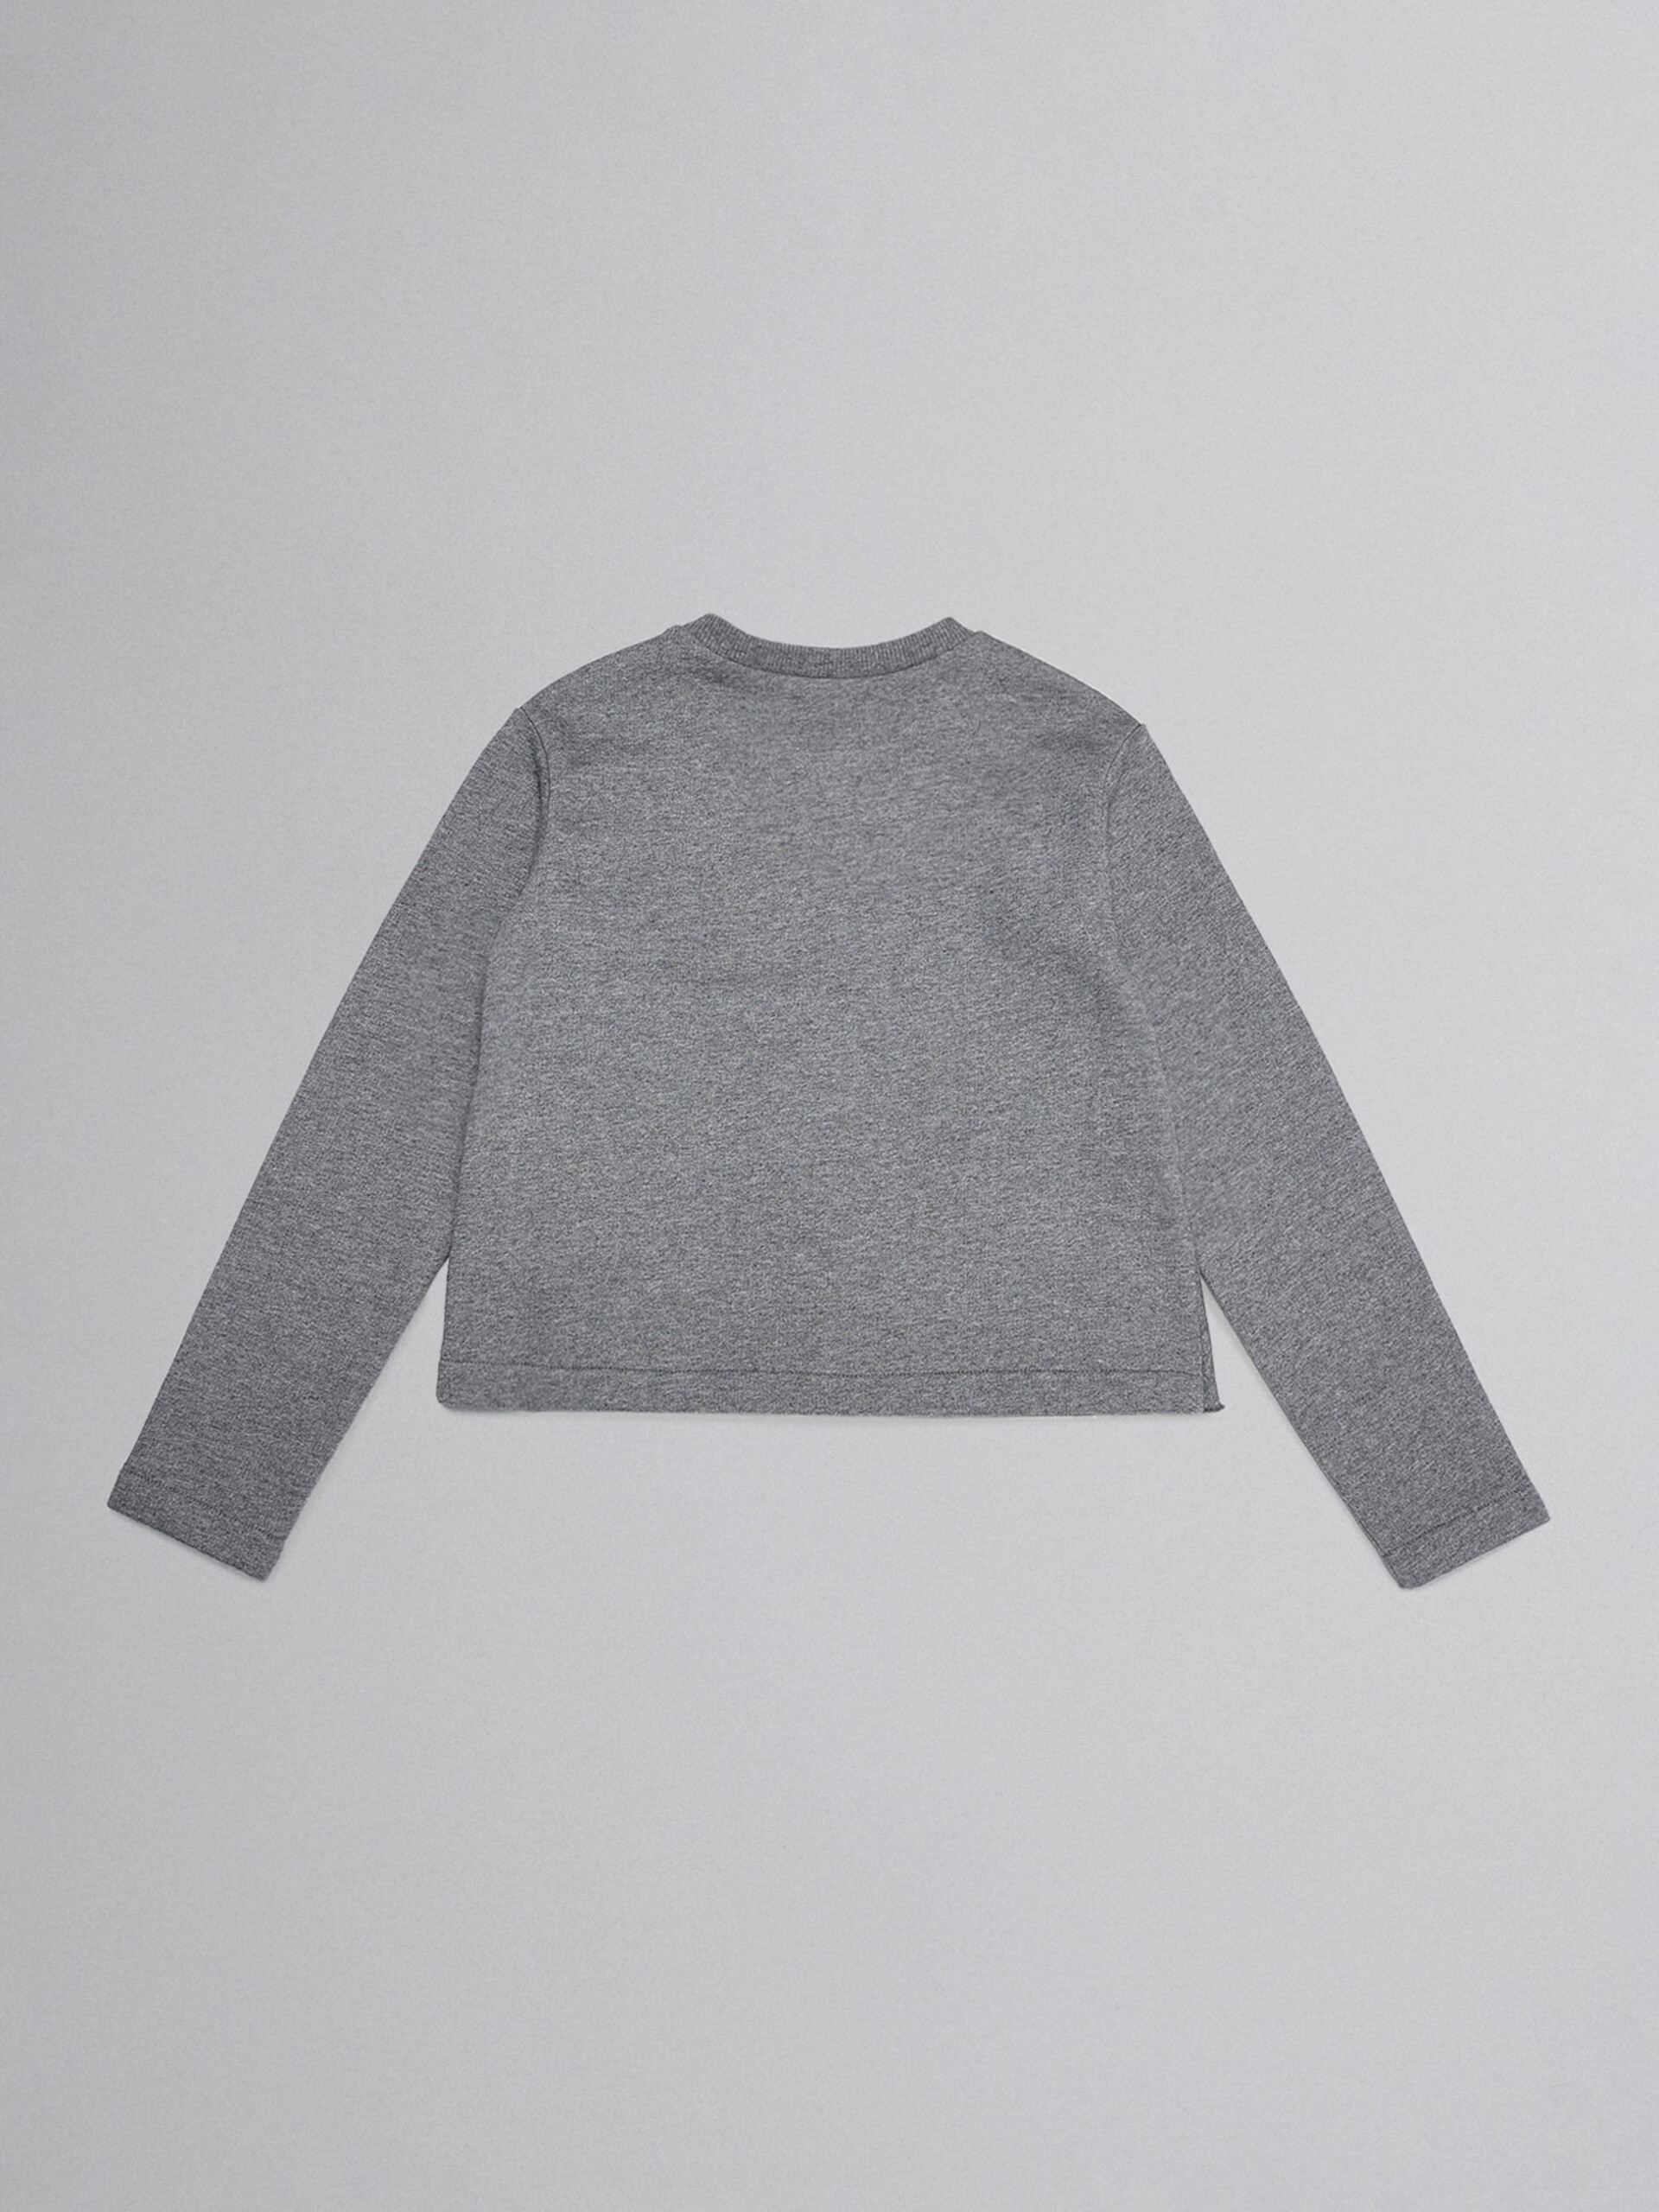 Grey melange sweatshirt with asymmetric flounce hem - Sweaters - Image 2